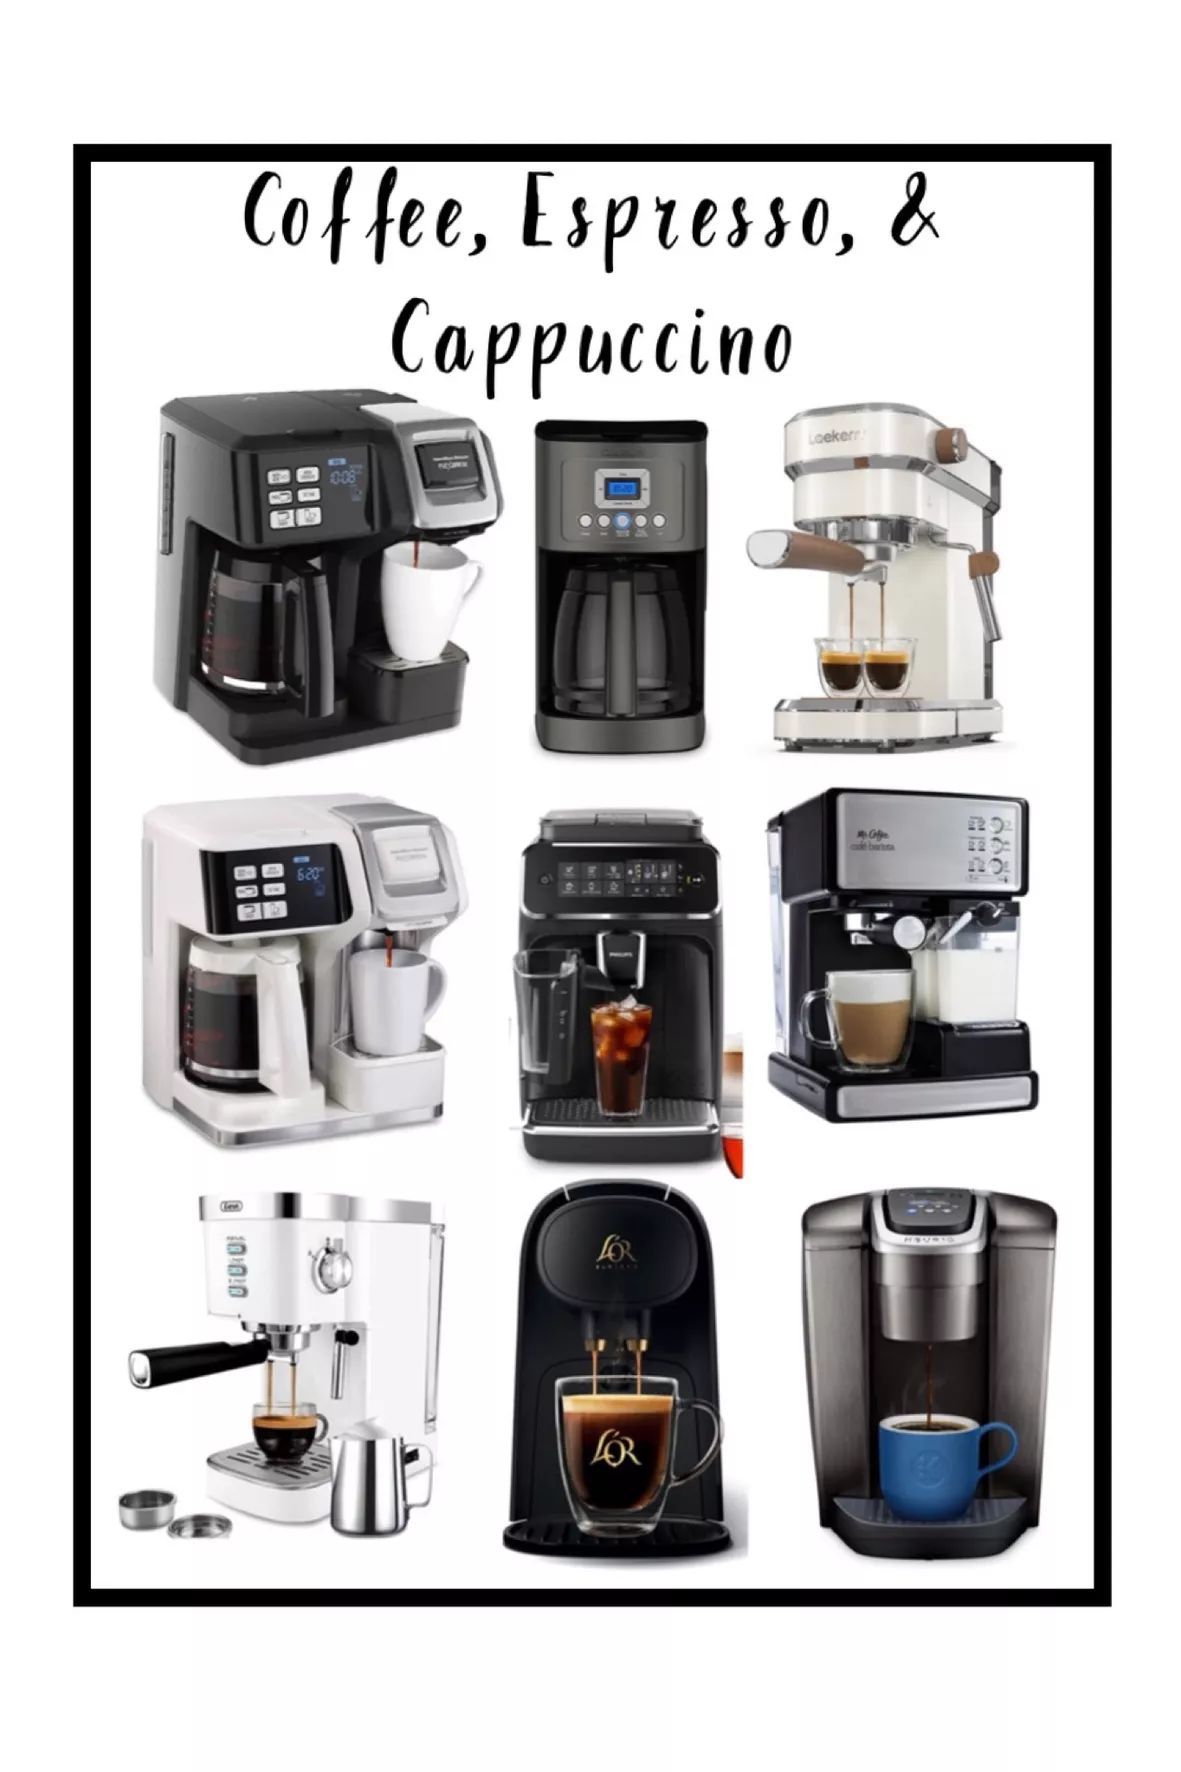 Laekerrt Espresso Machine, 20 Bar Coffee Maker CMEP01 with